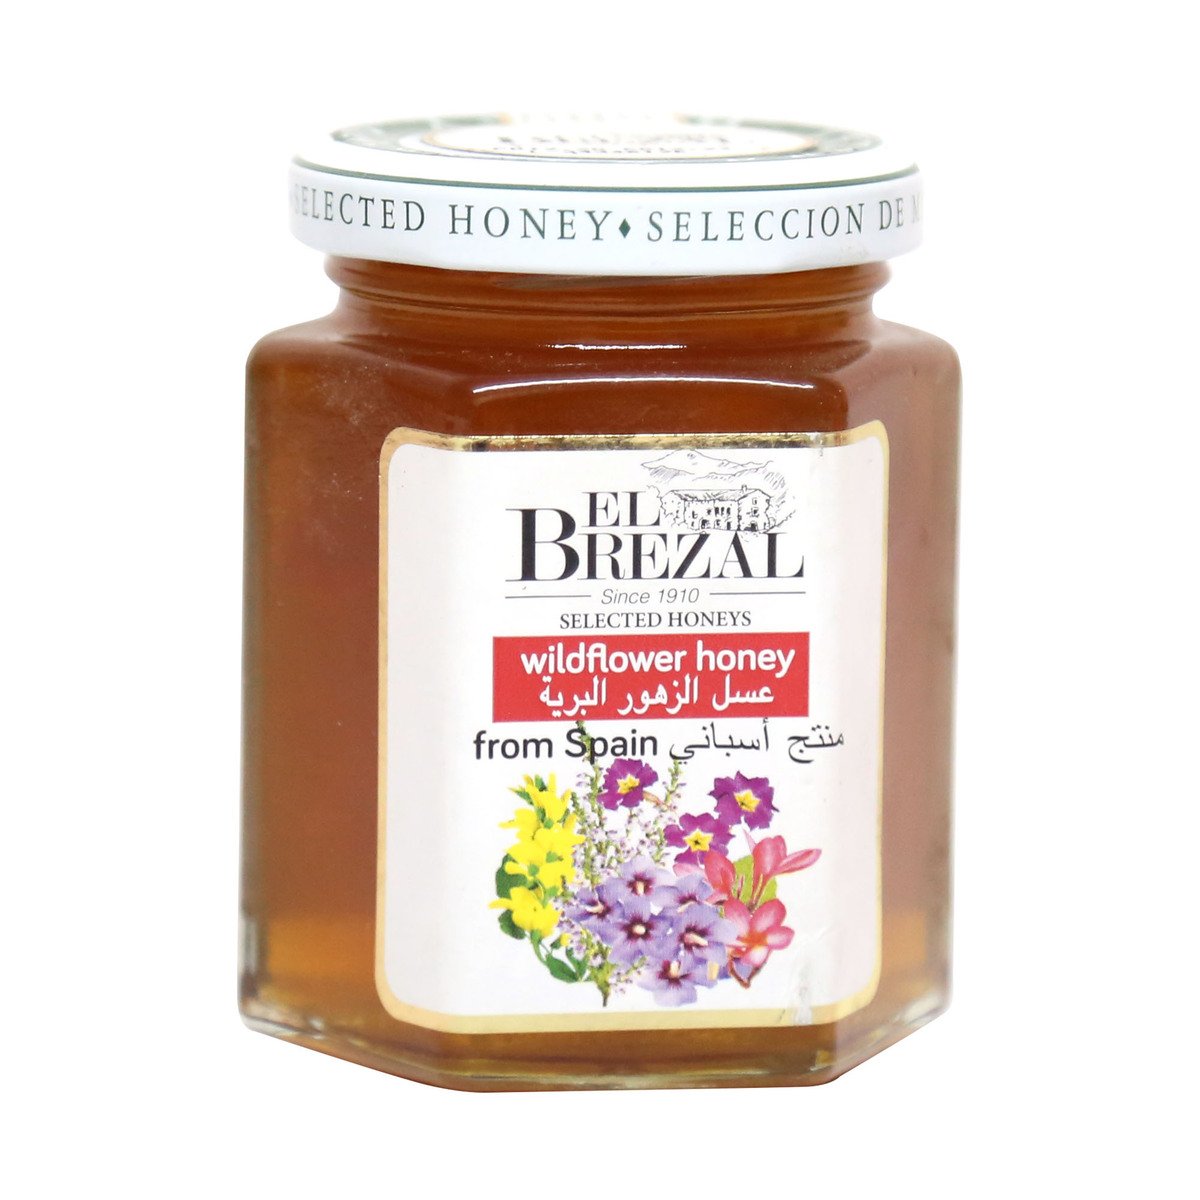 El Brezal Wild Flower Honey 250g